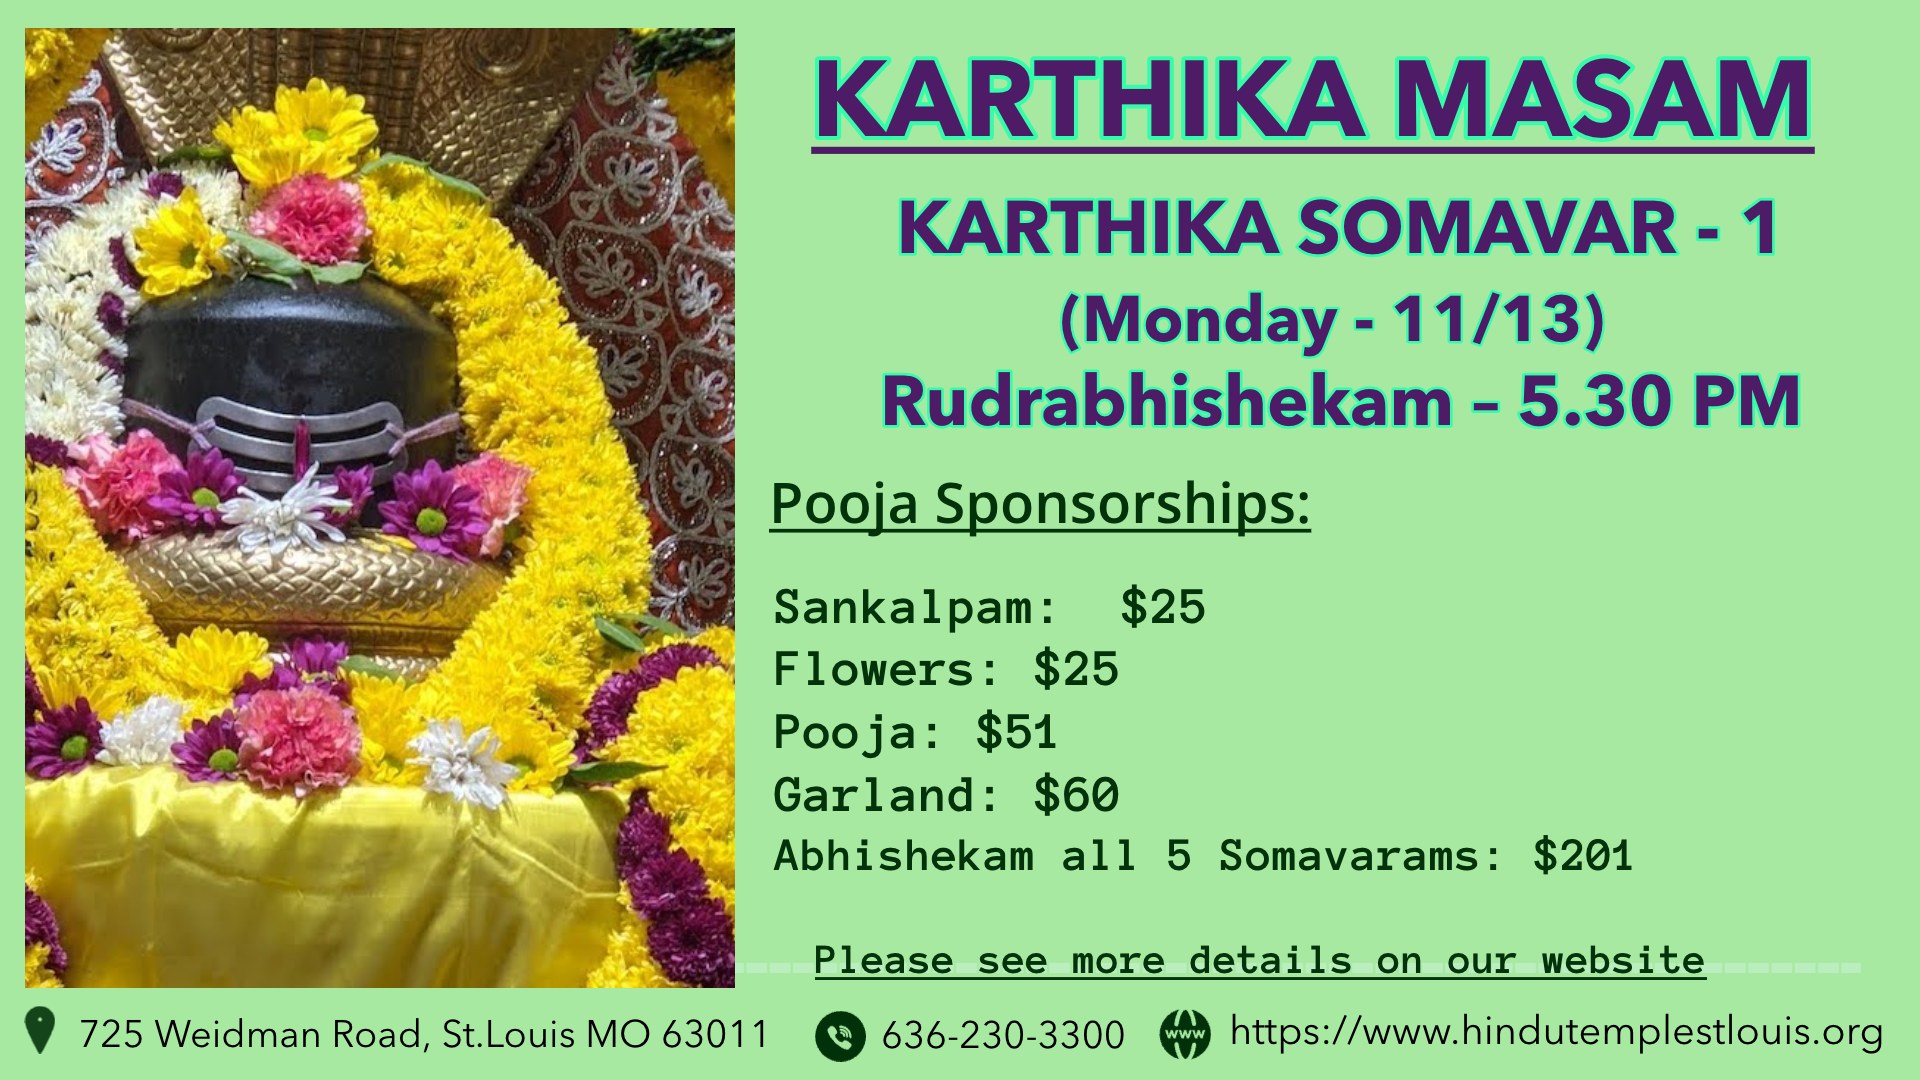 Karthika Masam - Somavar-1